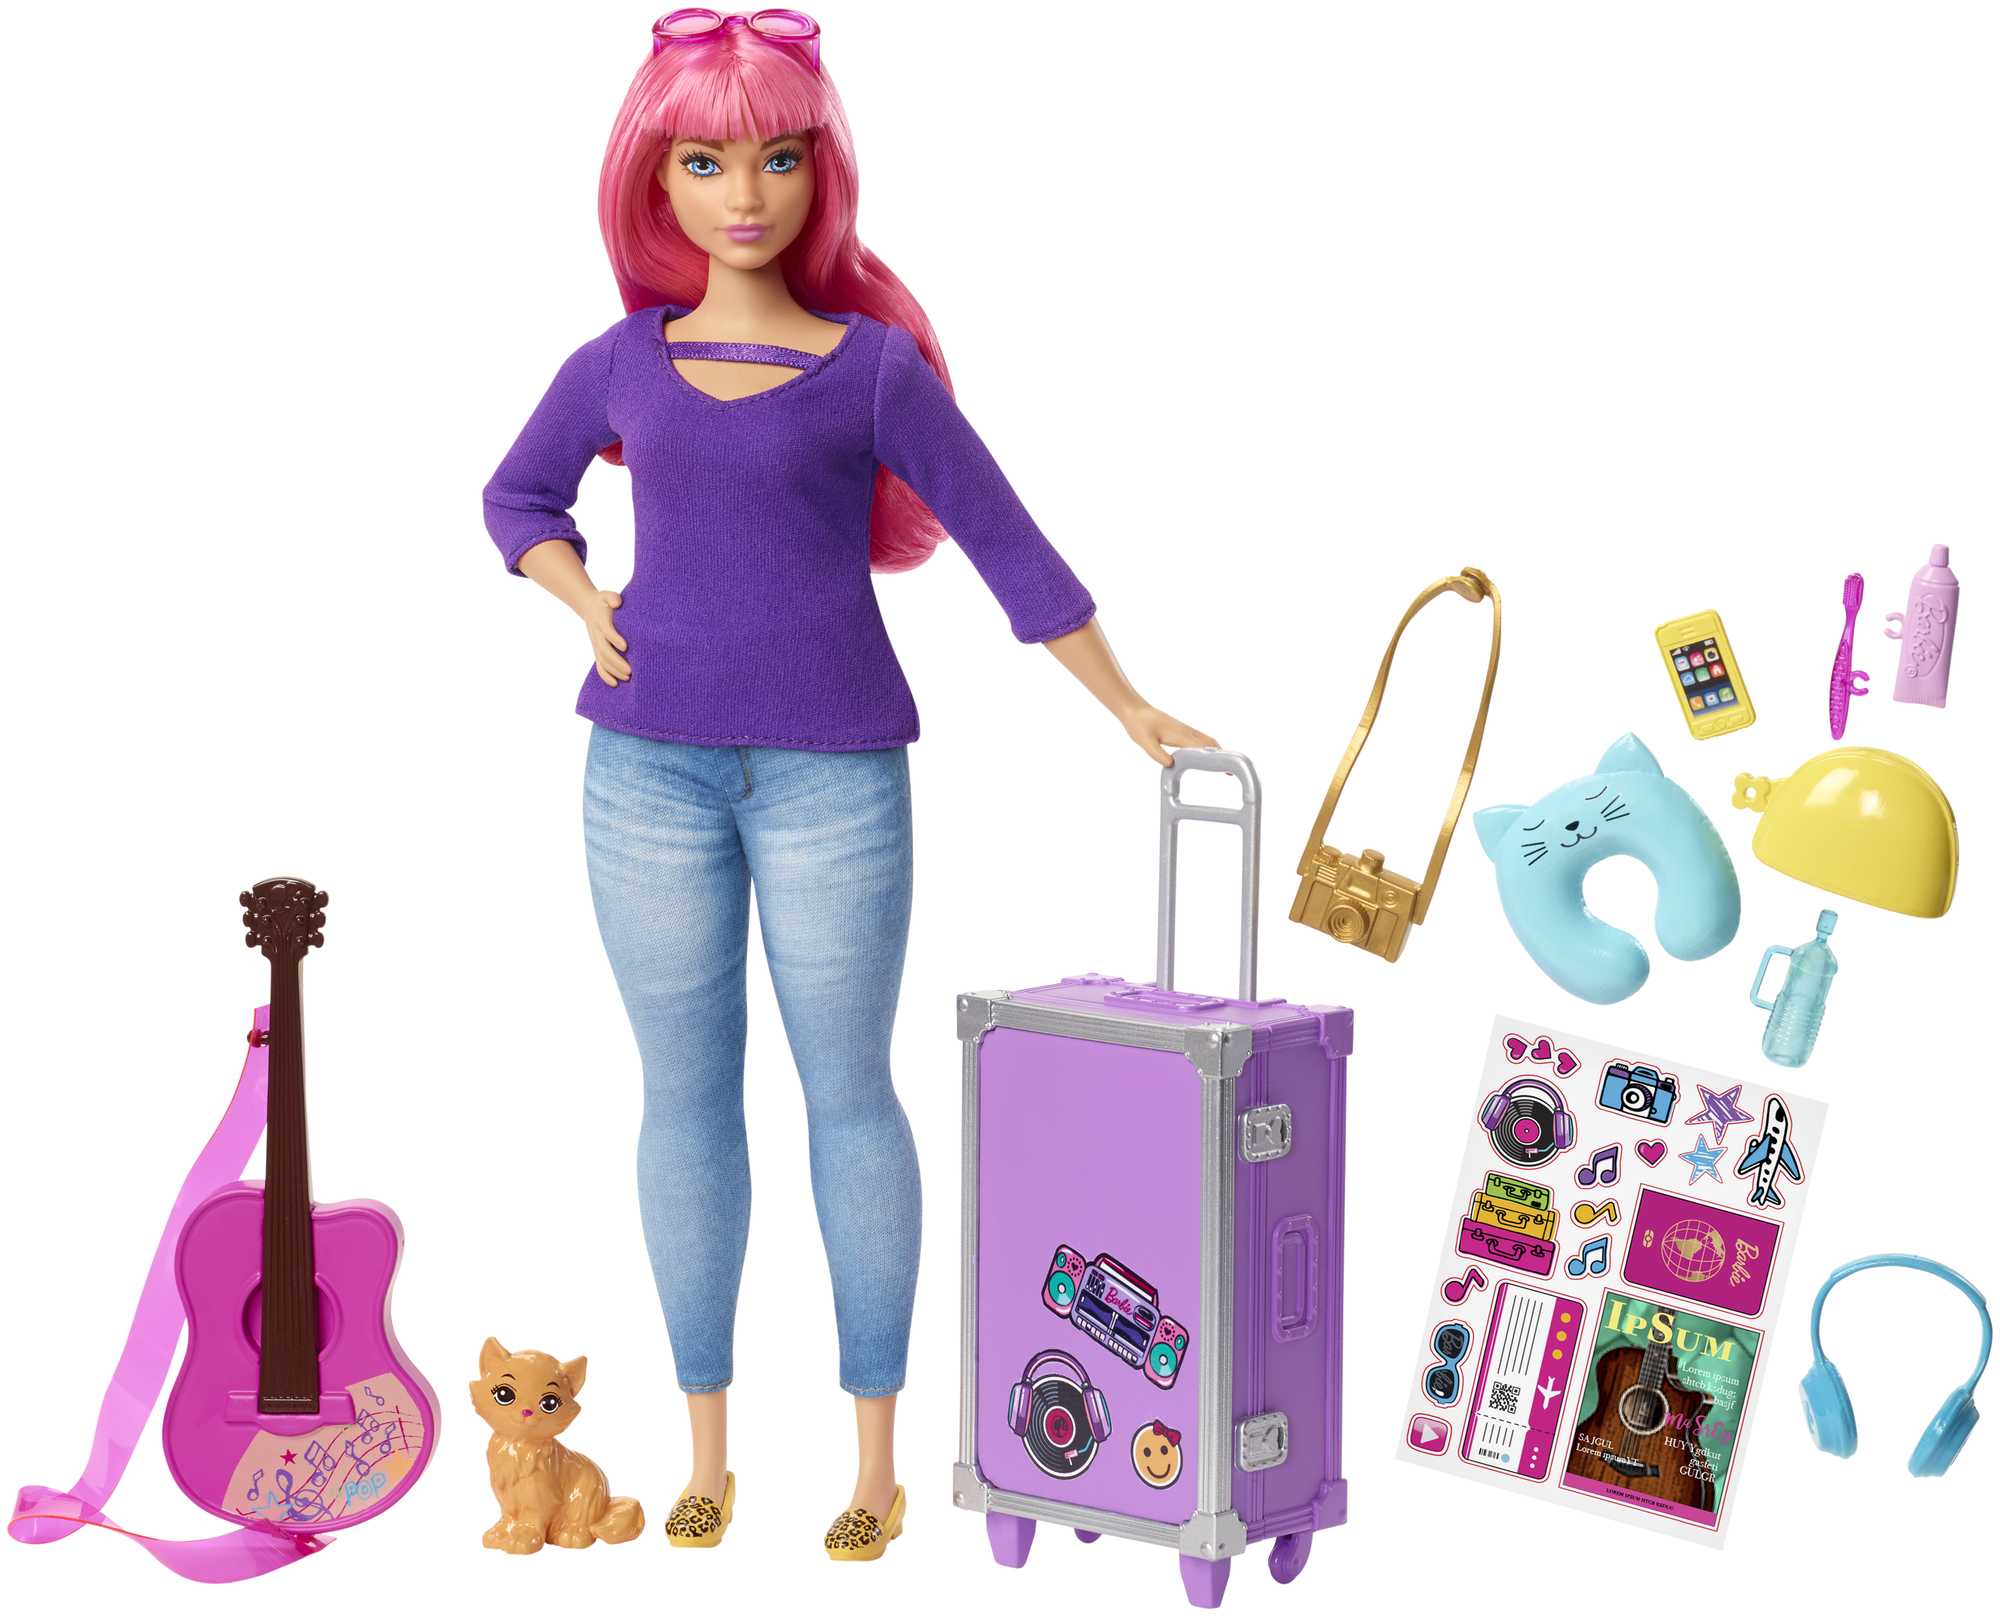 Barbie Princess Adventure Daisy Doll in Princess Fashion, Pink Hair